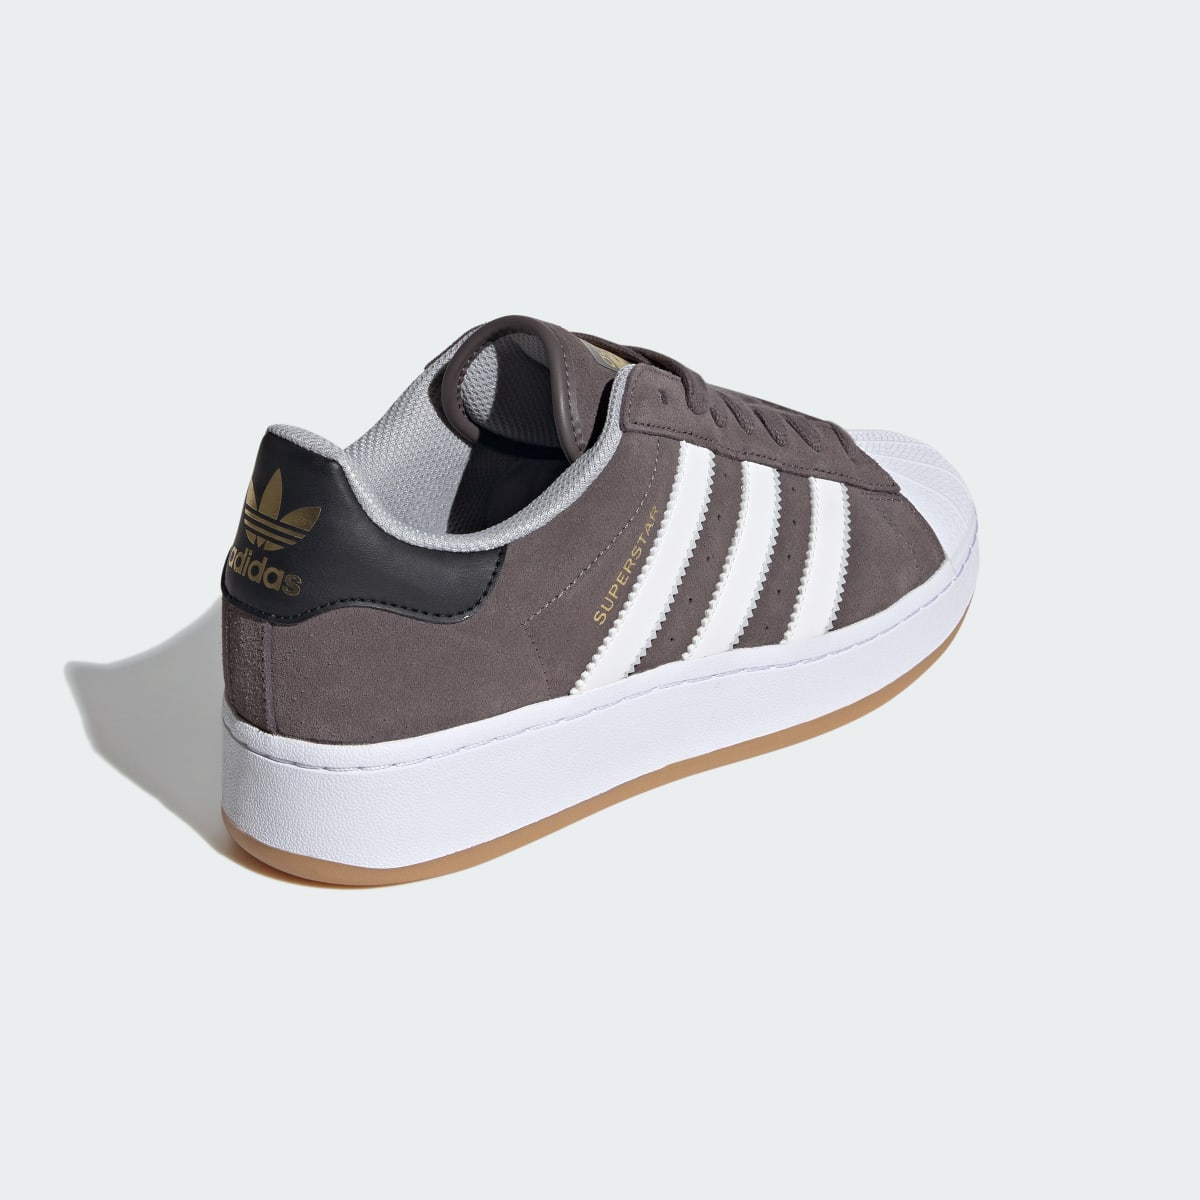 Adidas Superstar XLG Schuh. 6